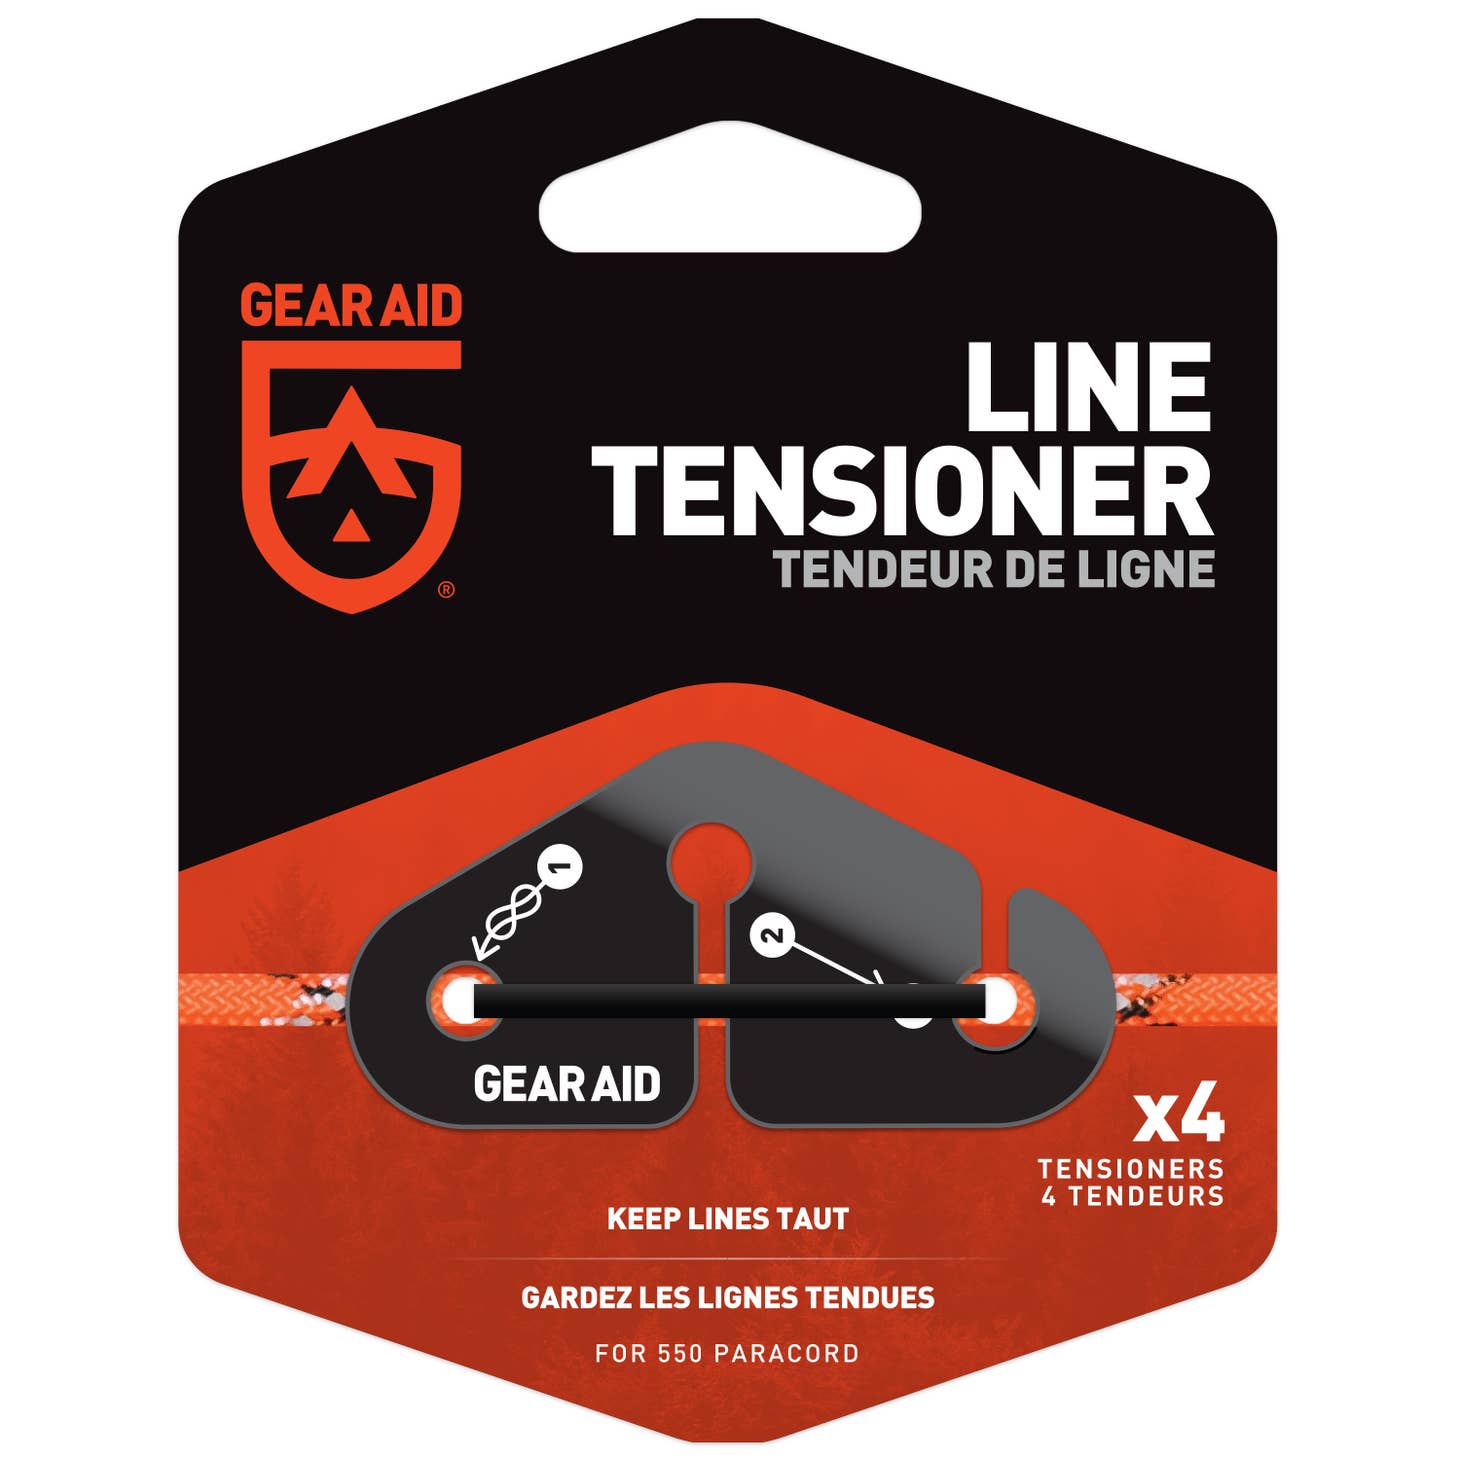 Line Tensioner | Gear Aid